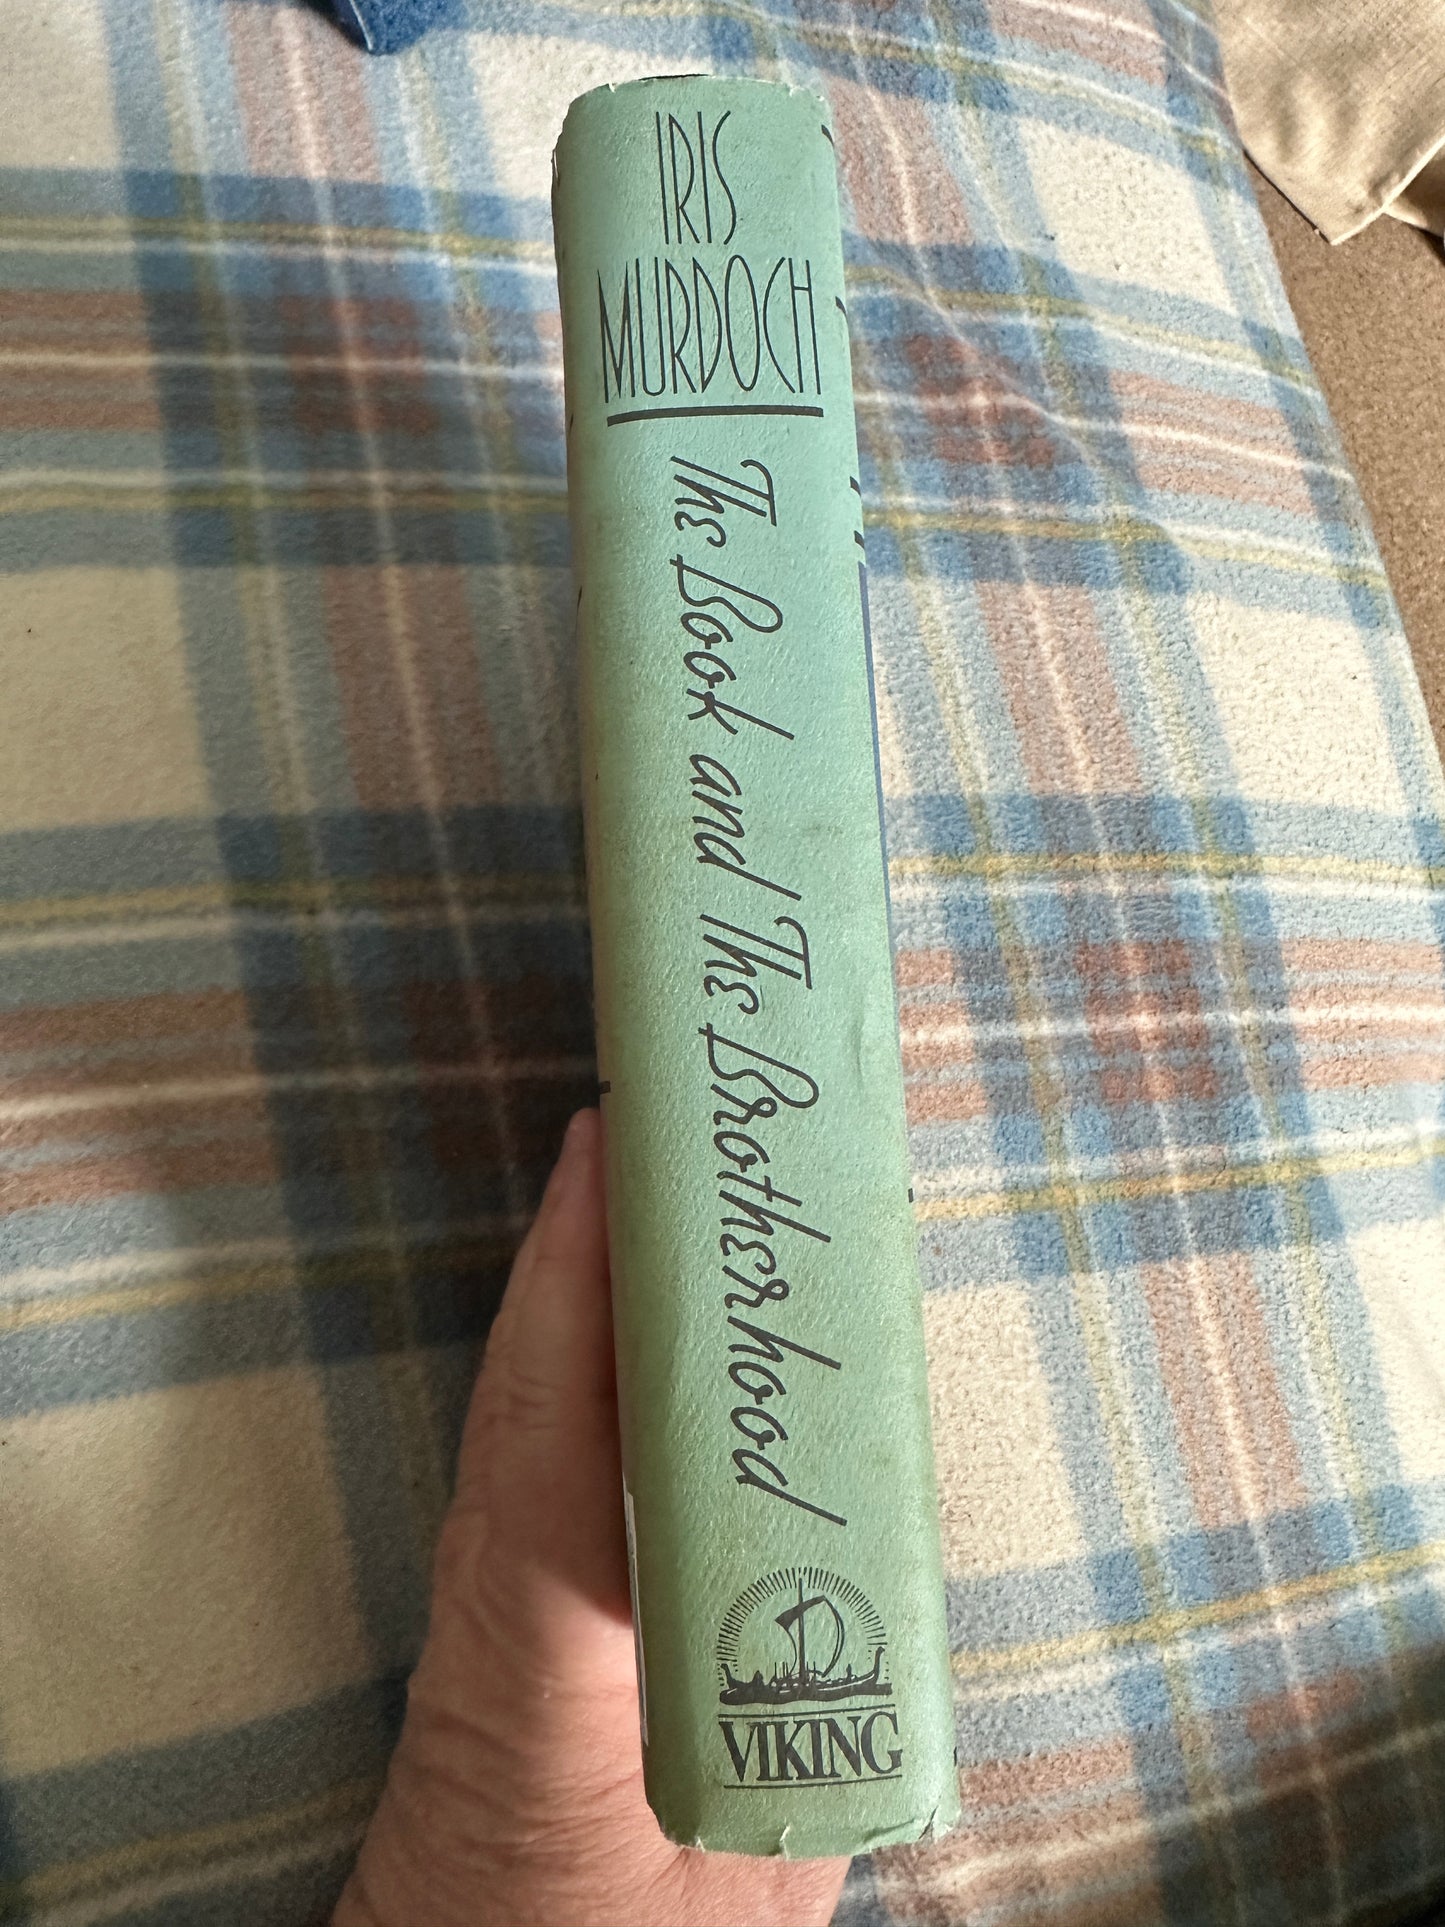 1988(First American Edition) The Book & The Brotherhood - Iris Murdoch(Viking Publisher)